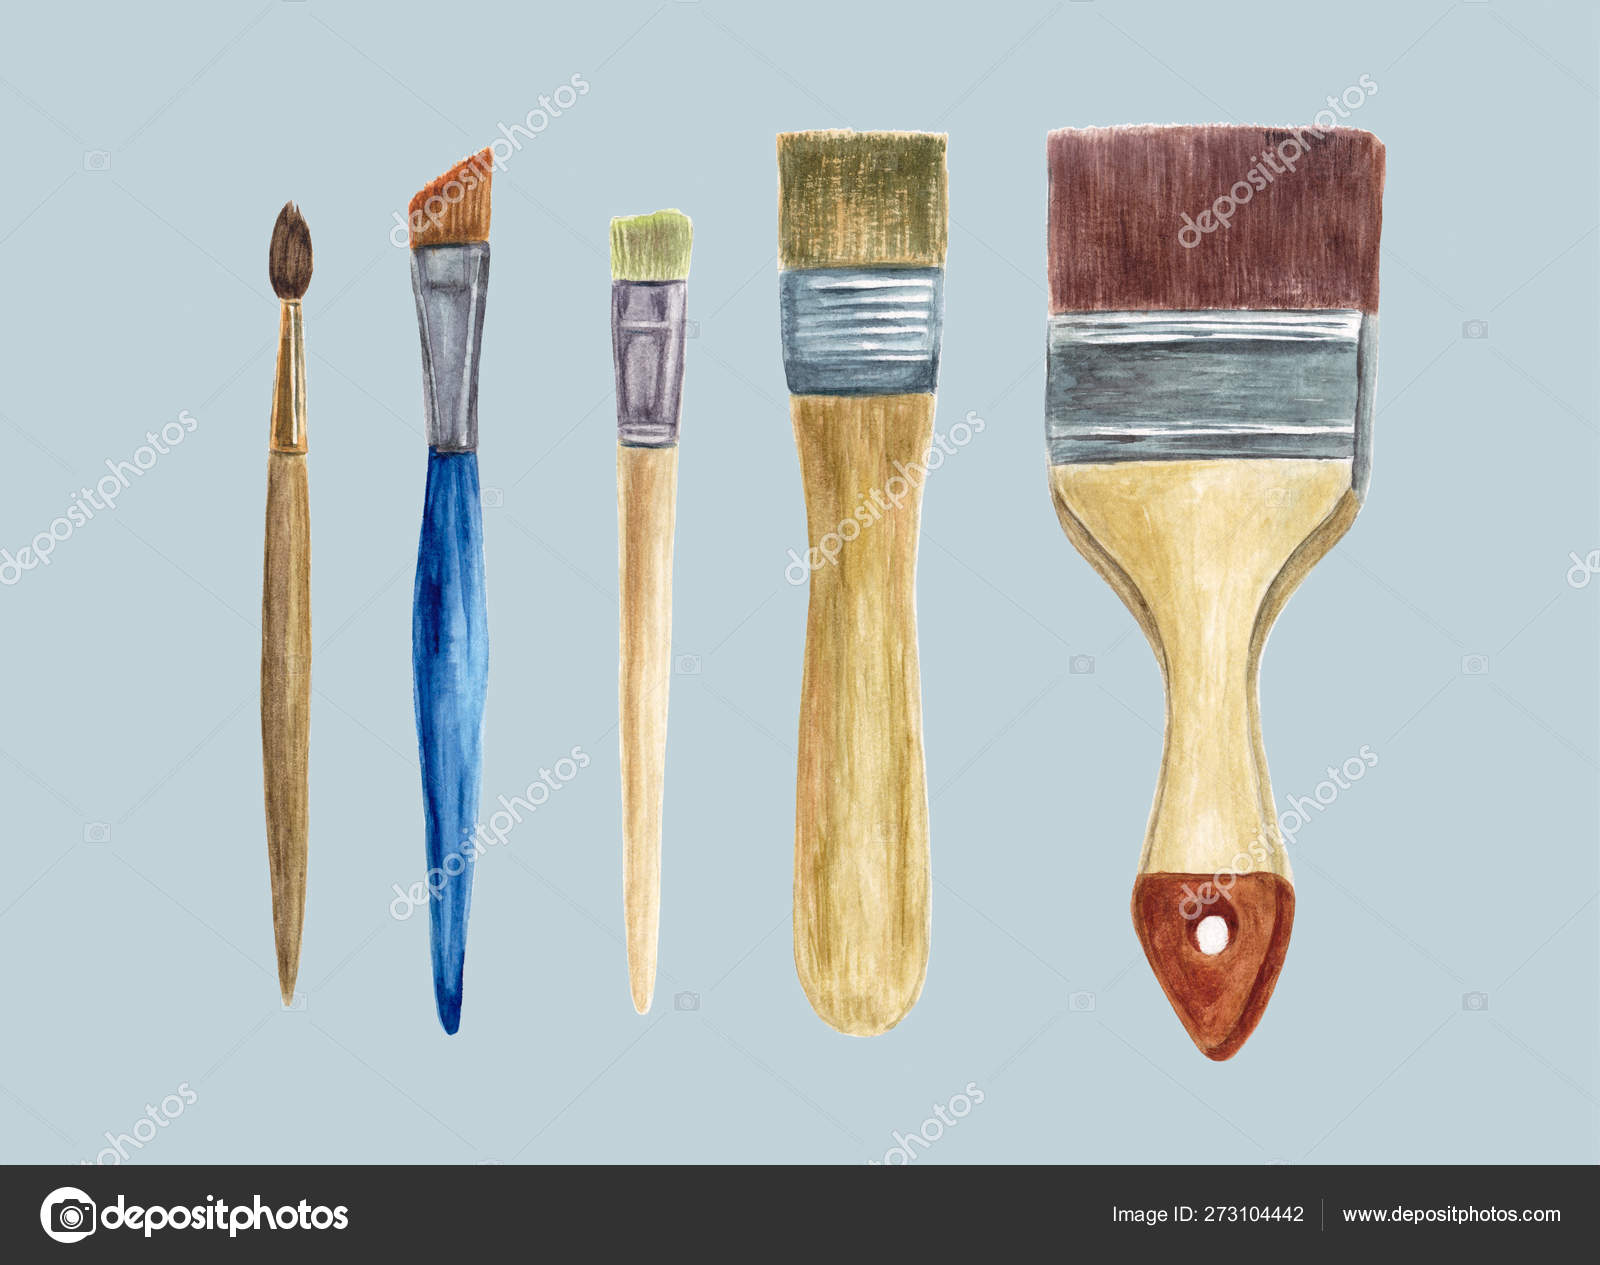 https://st4.depositphotos.com/5334922/27310/i/1600/depositphotos_273104442-stock-illustration-set-of-paint-brushes-isolated.jpg